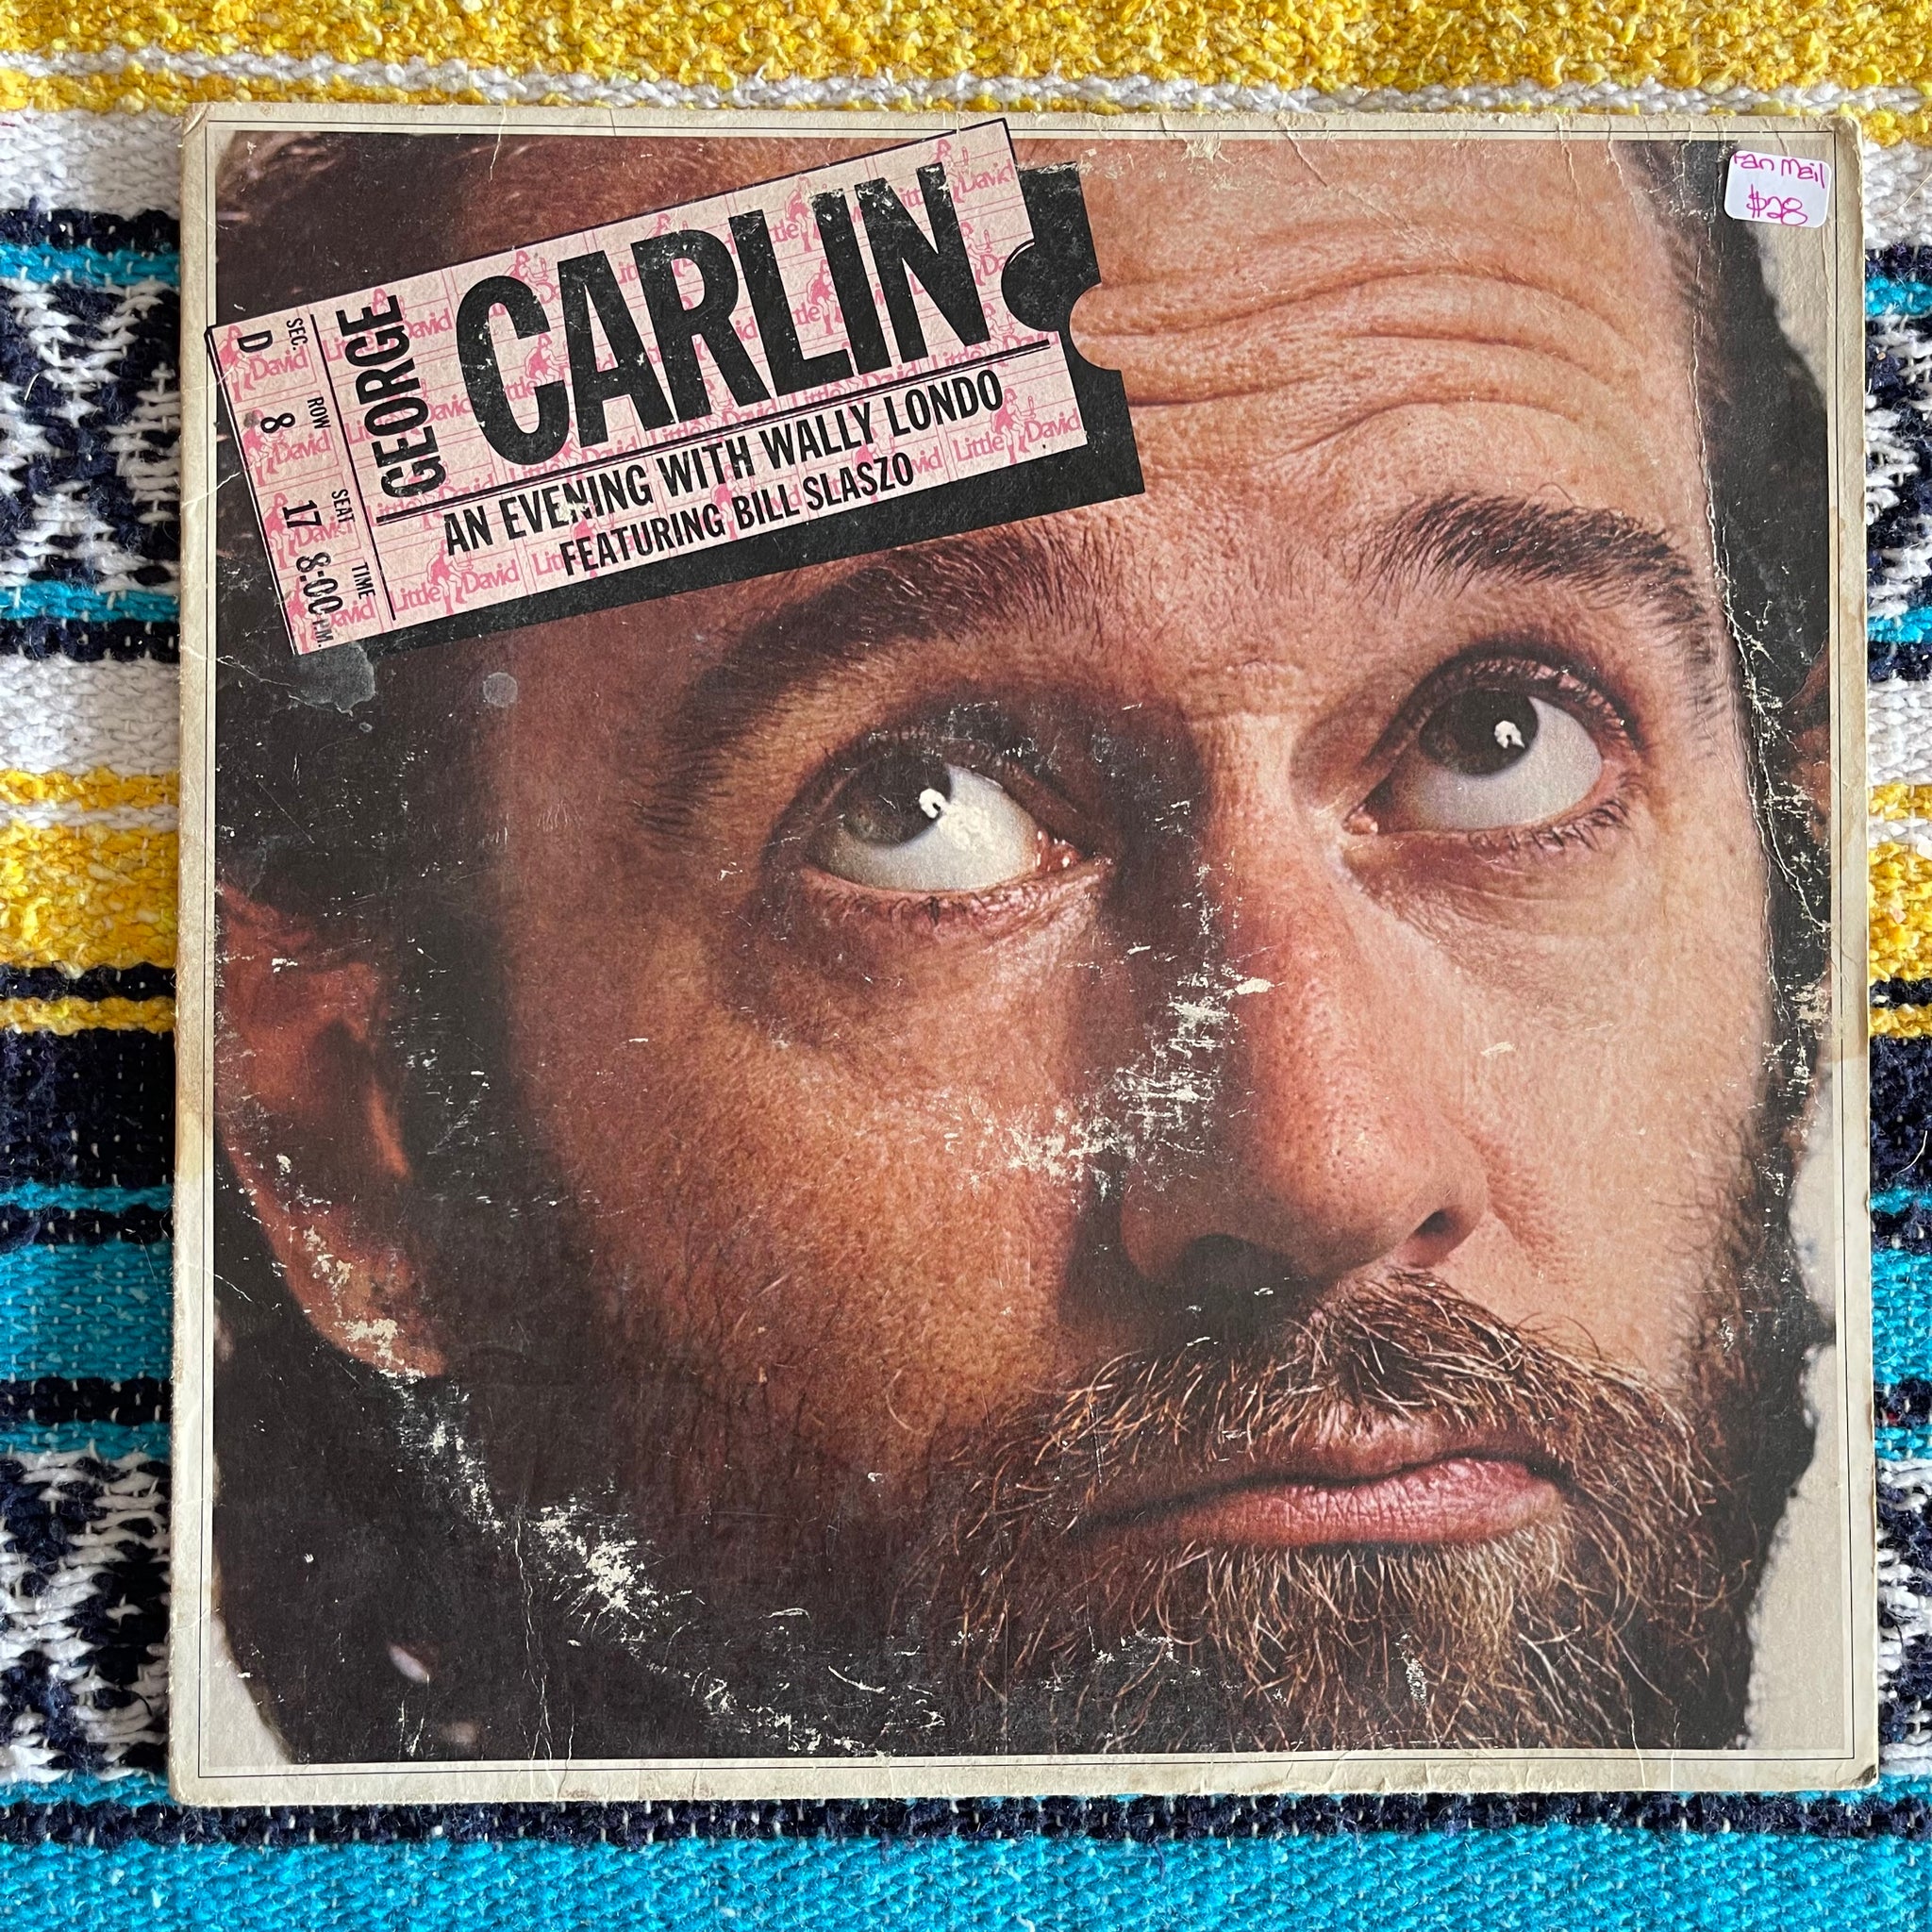 George Carlin-An Evening with Wally Londo Feat. Bill Slazso